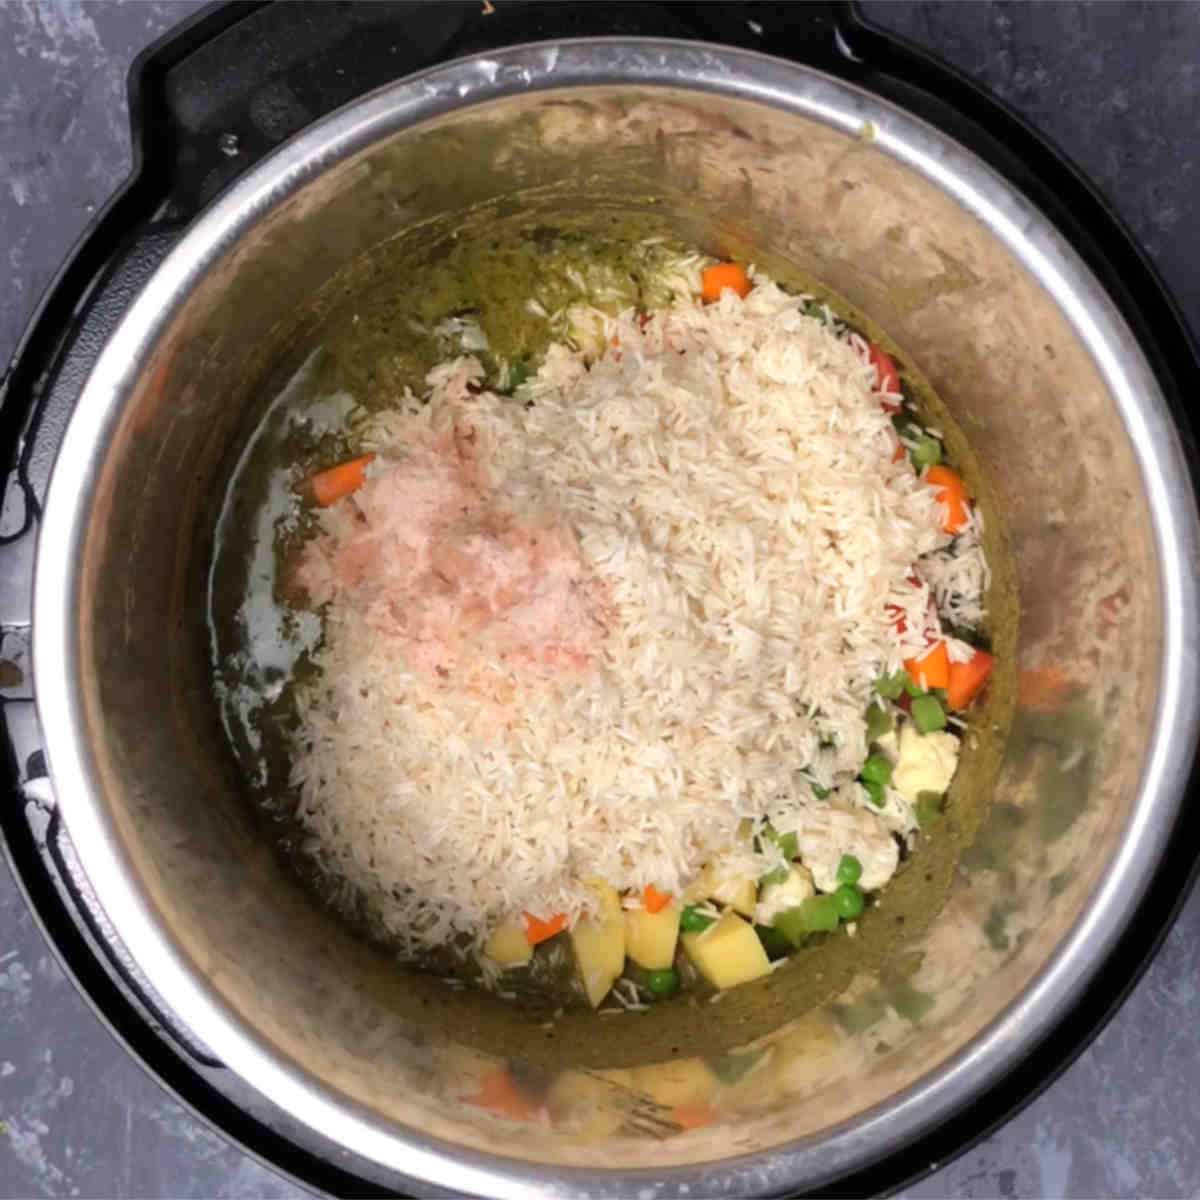 Add vegs, rice, and salt.